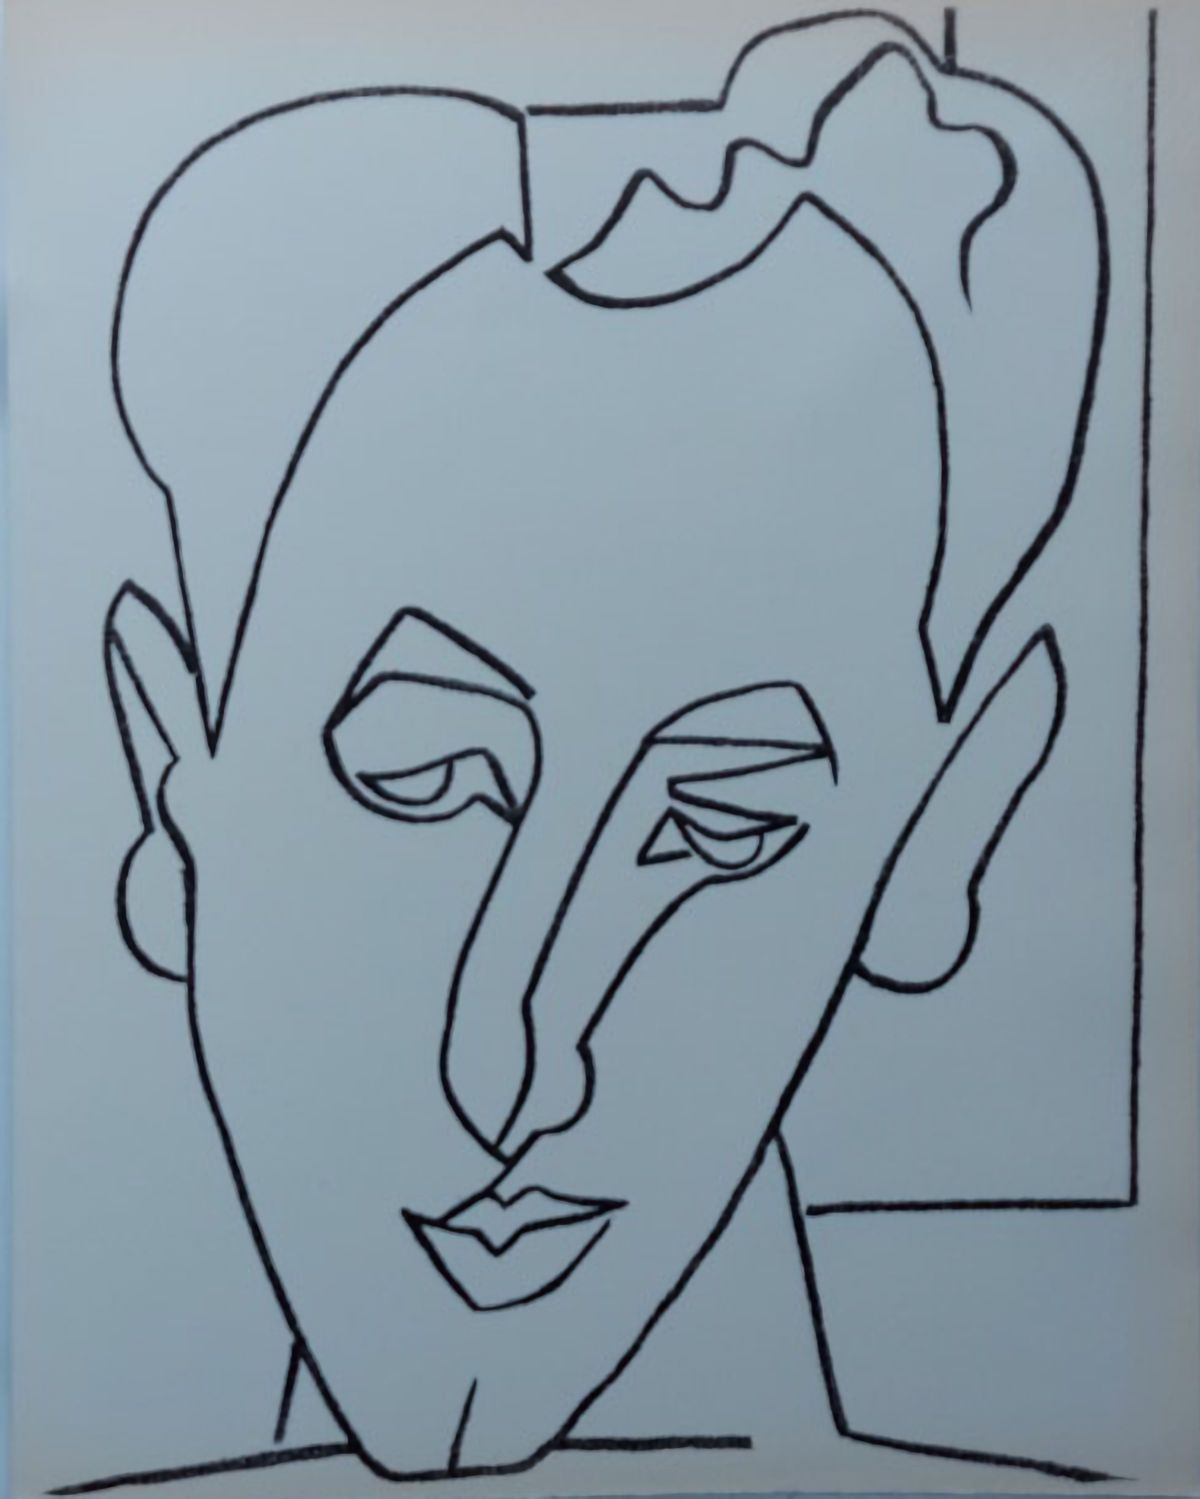 FRANÇOISE GILOT Françoise GILOT

喜爱之页, 1951

黑白石板画原作，出自安德烈-韦尔德的《爱的页面》一书，印在着色的MAR&hellip;